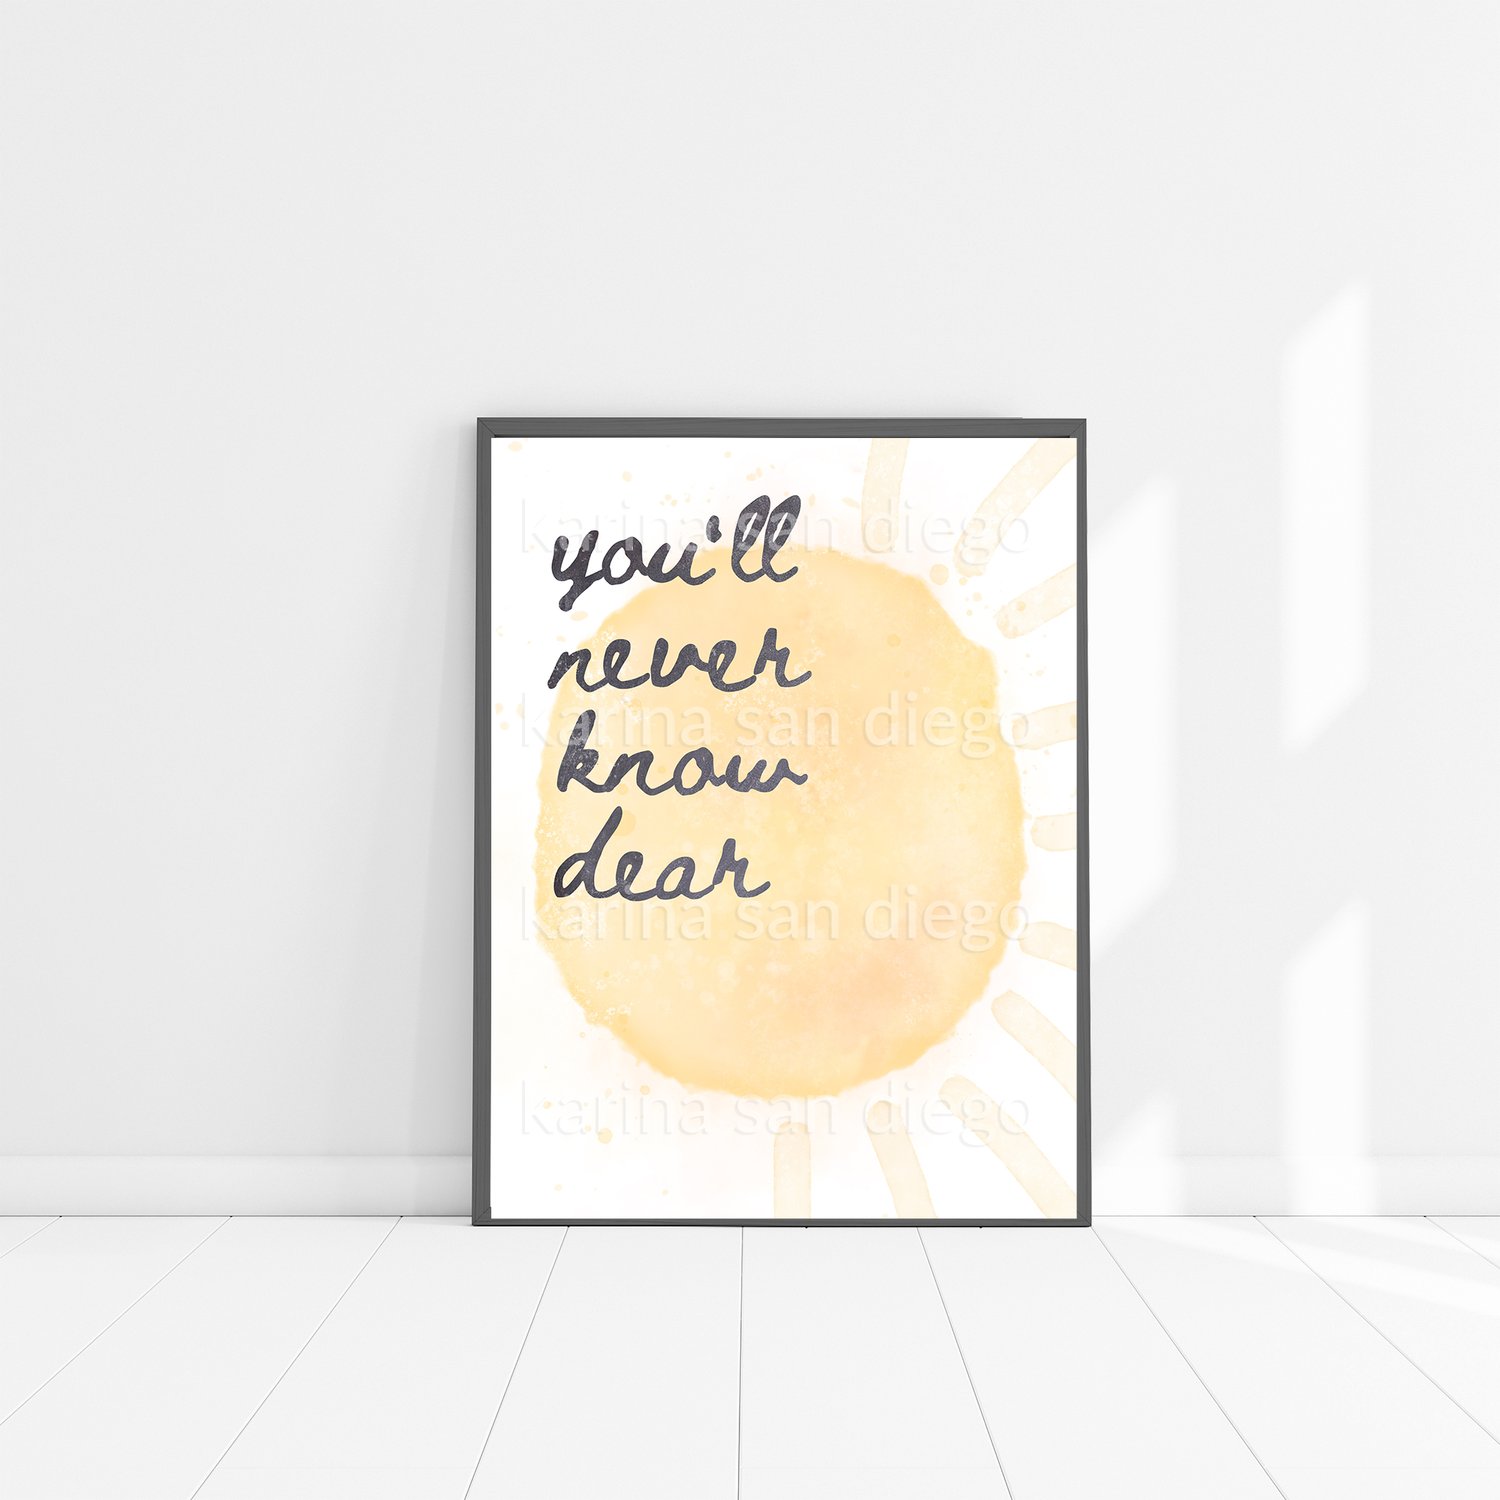 You Are My Sunshine Lyrics - Printable Nursery Watercolor Wall